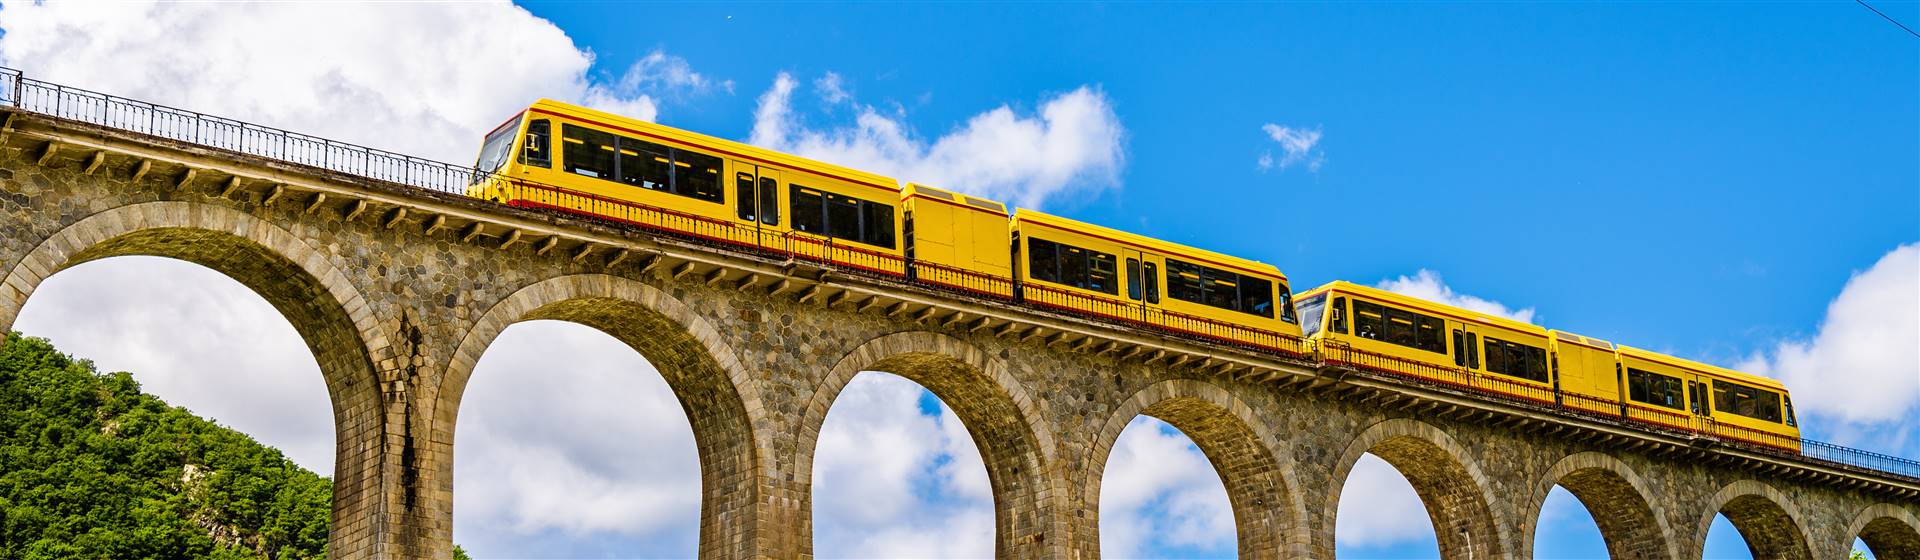 <img src="trainjaune©leonidandronov-shutterstock.jpeg" alt="The Yellow Train"/>